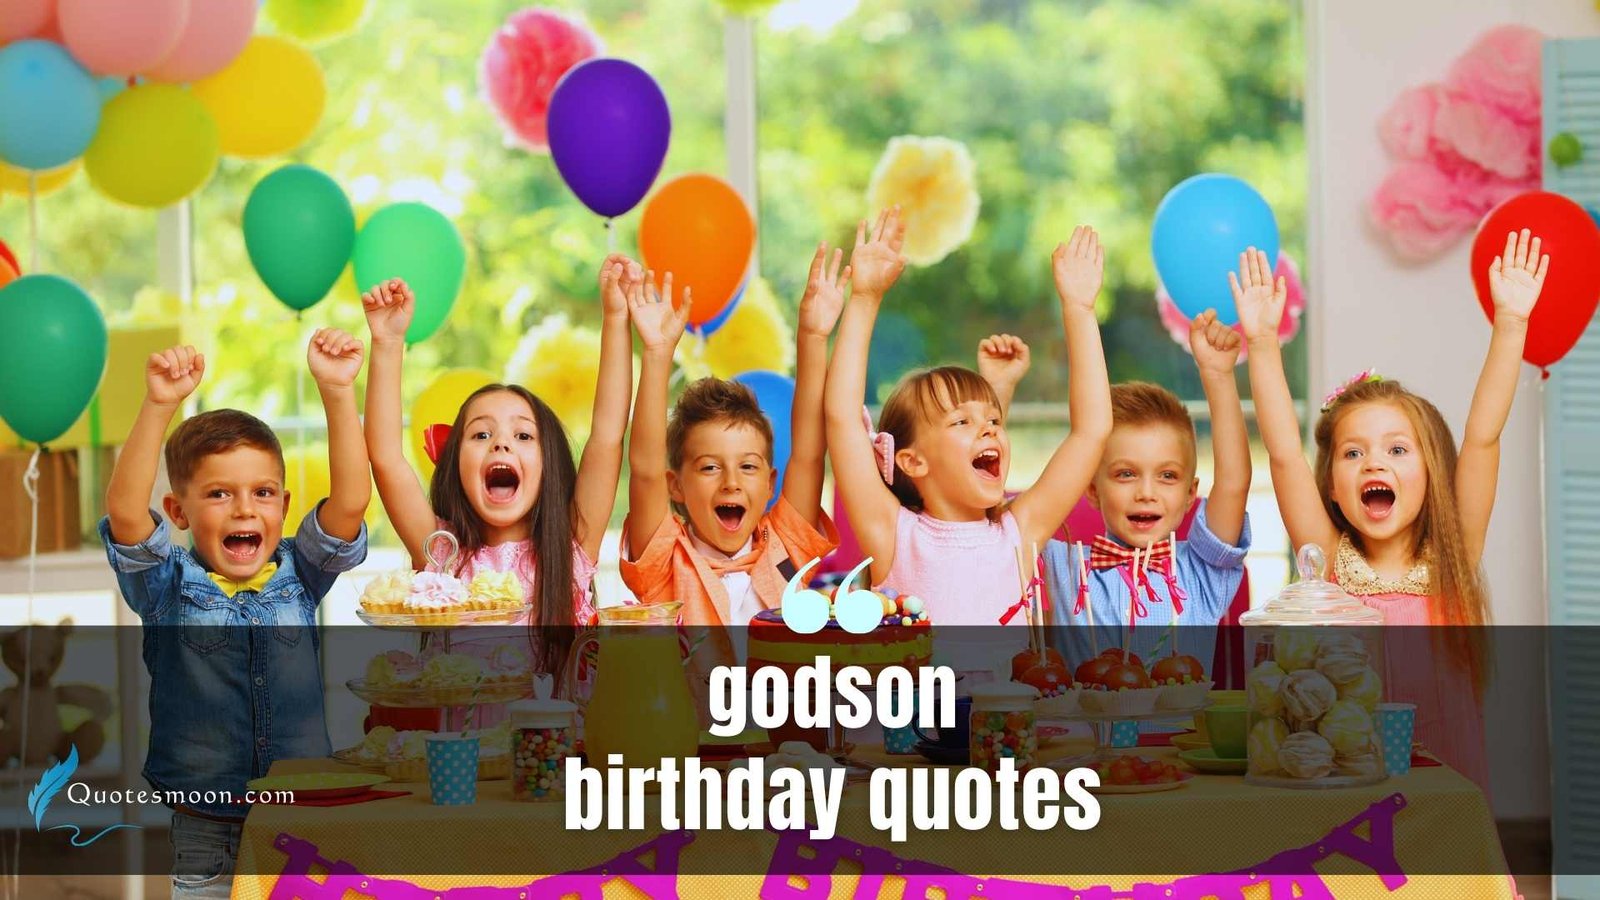 godson birthday quotes images